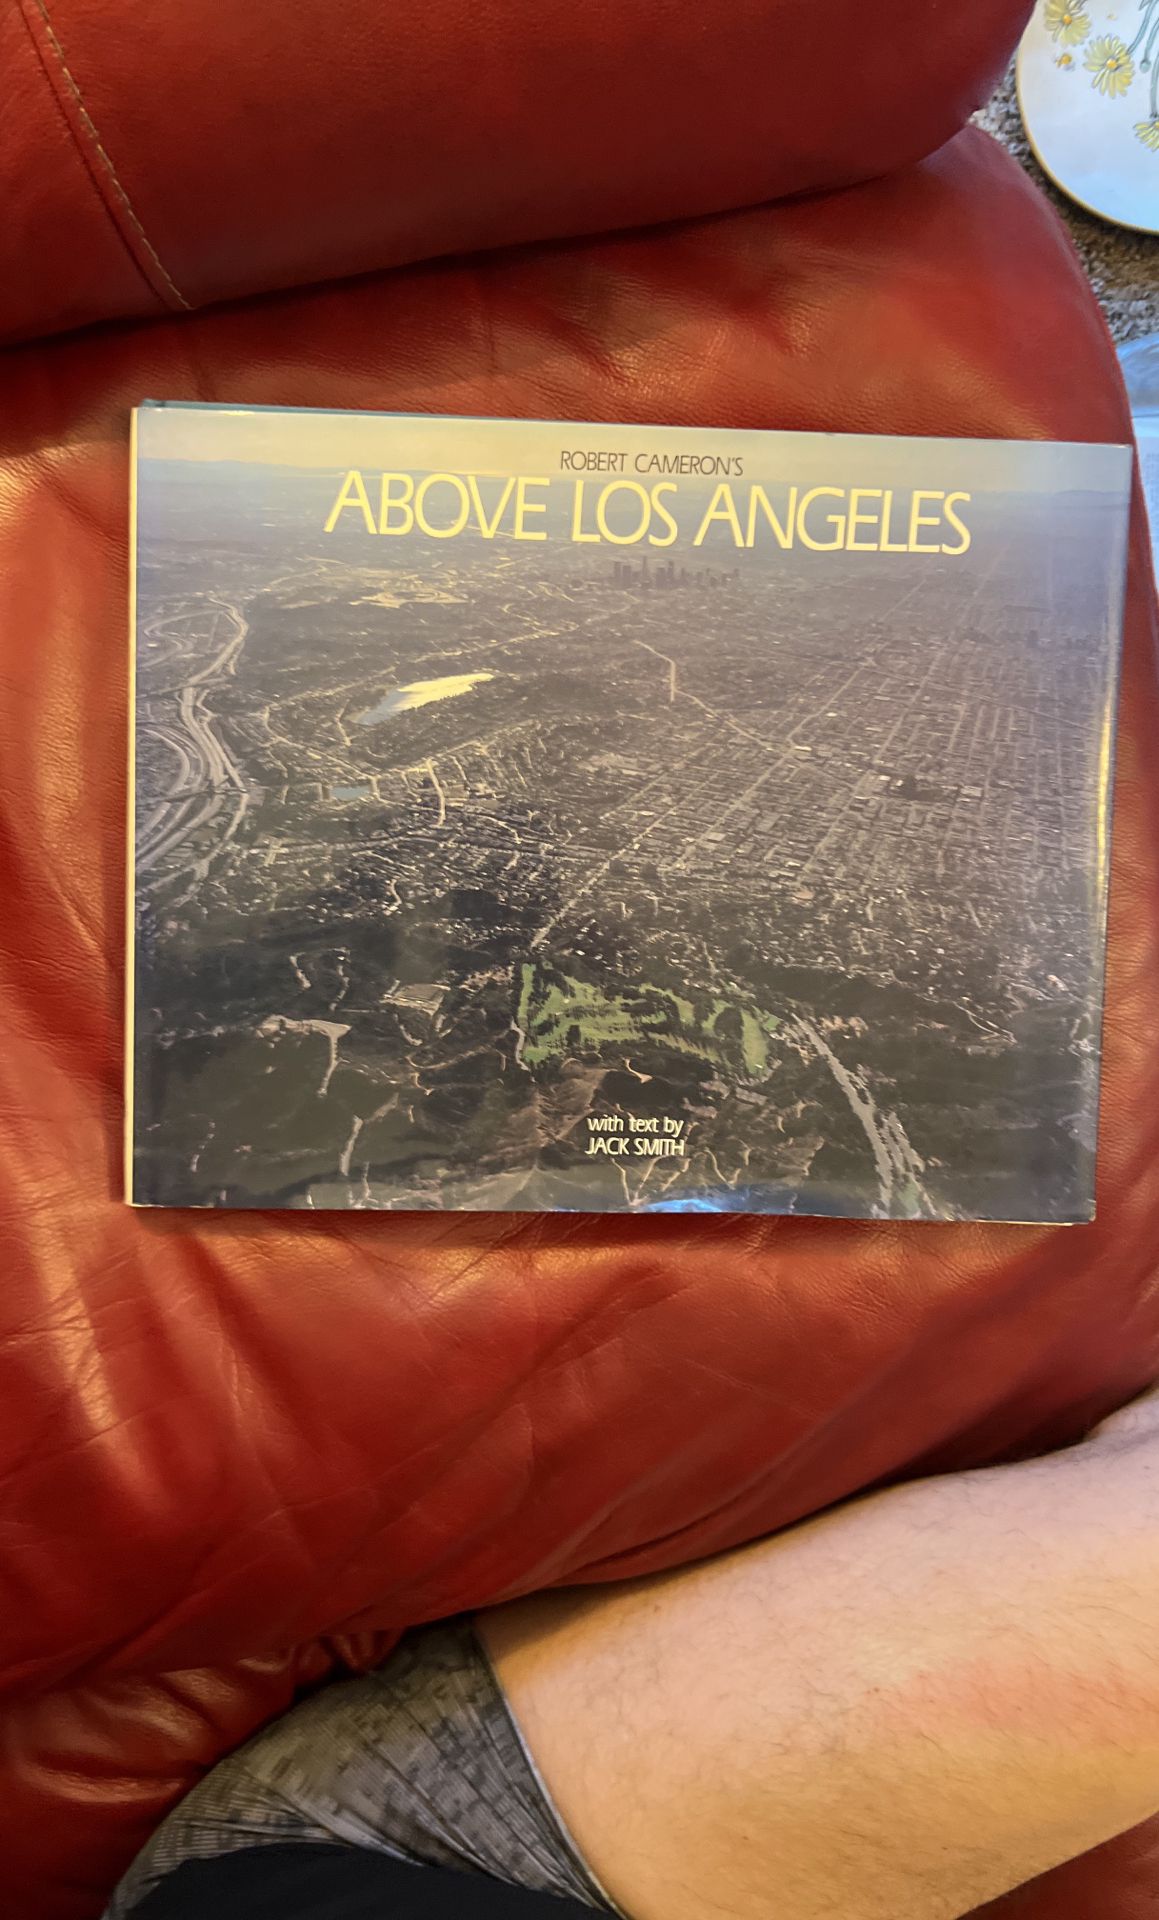 Robert Cameron’s Above Los Angeles